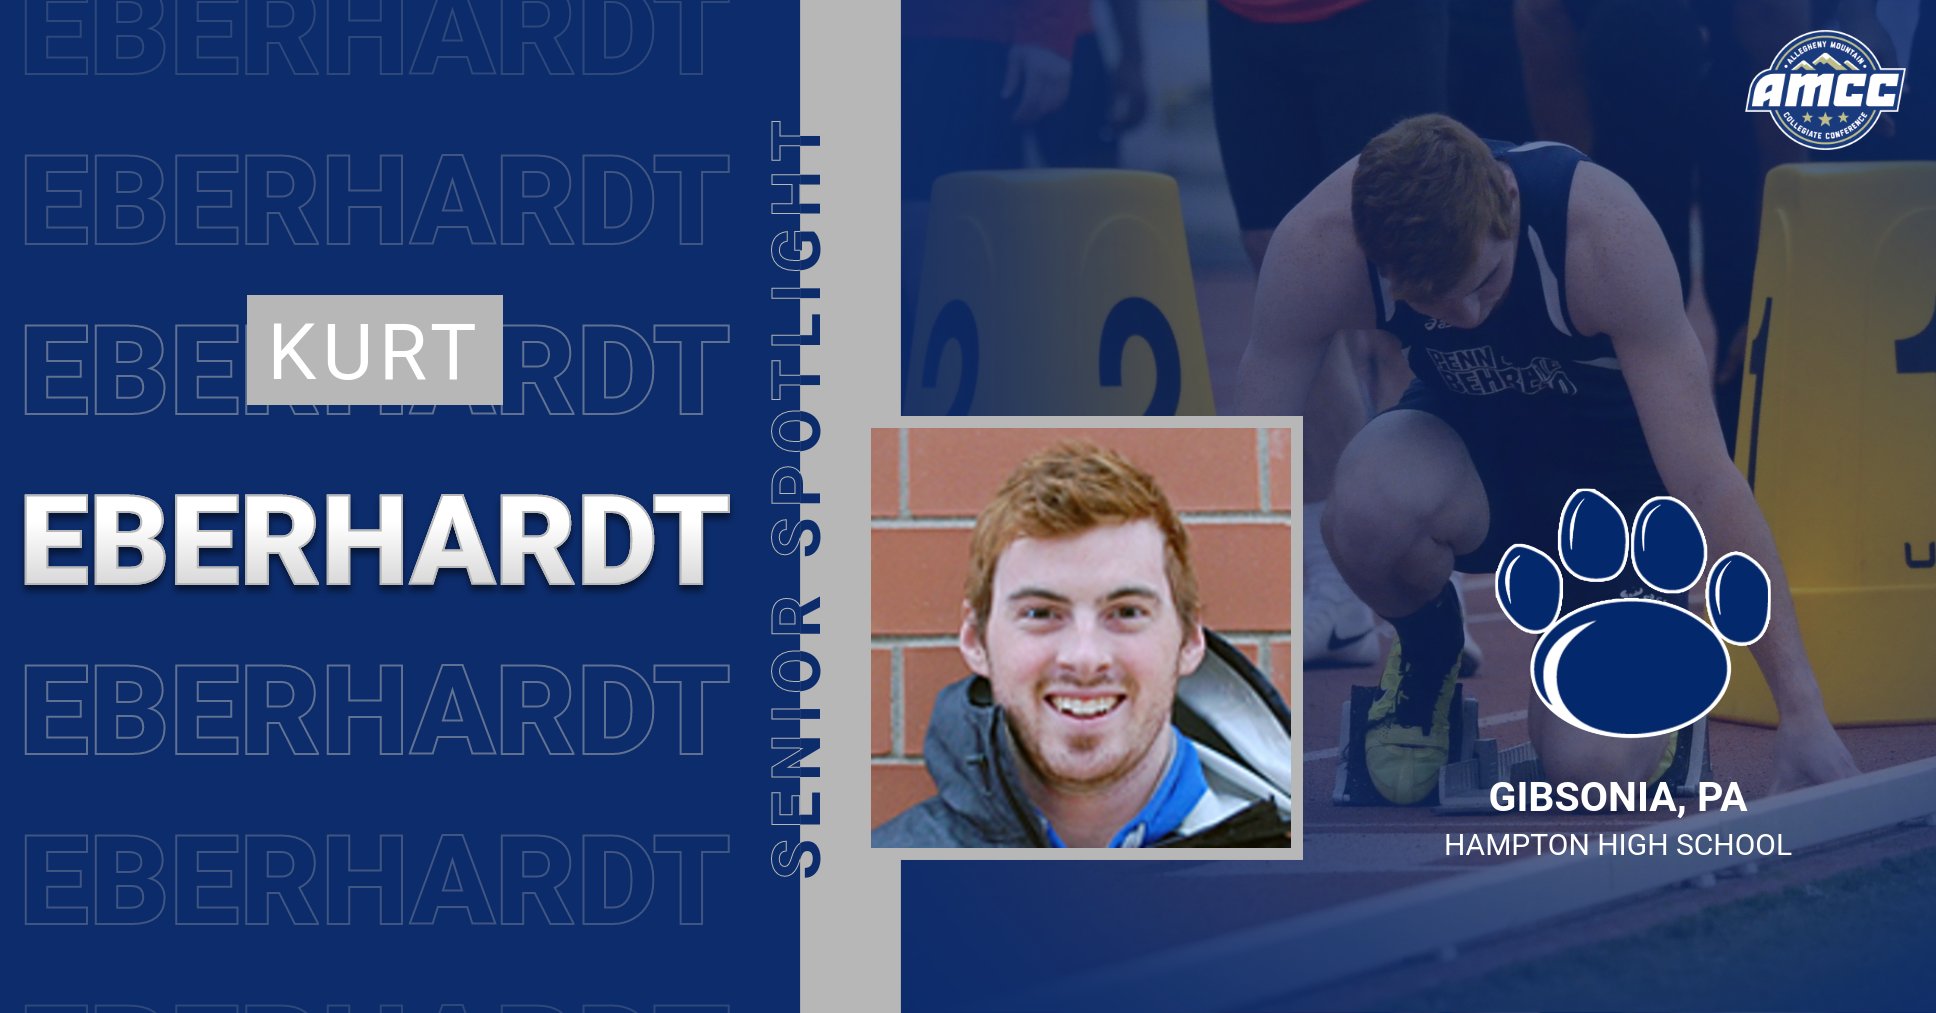 Senior Salute - Kurt Eberhardt, Track and Field